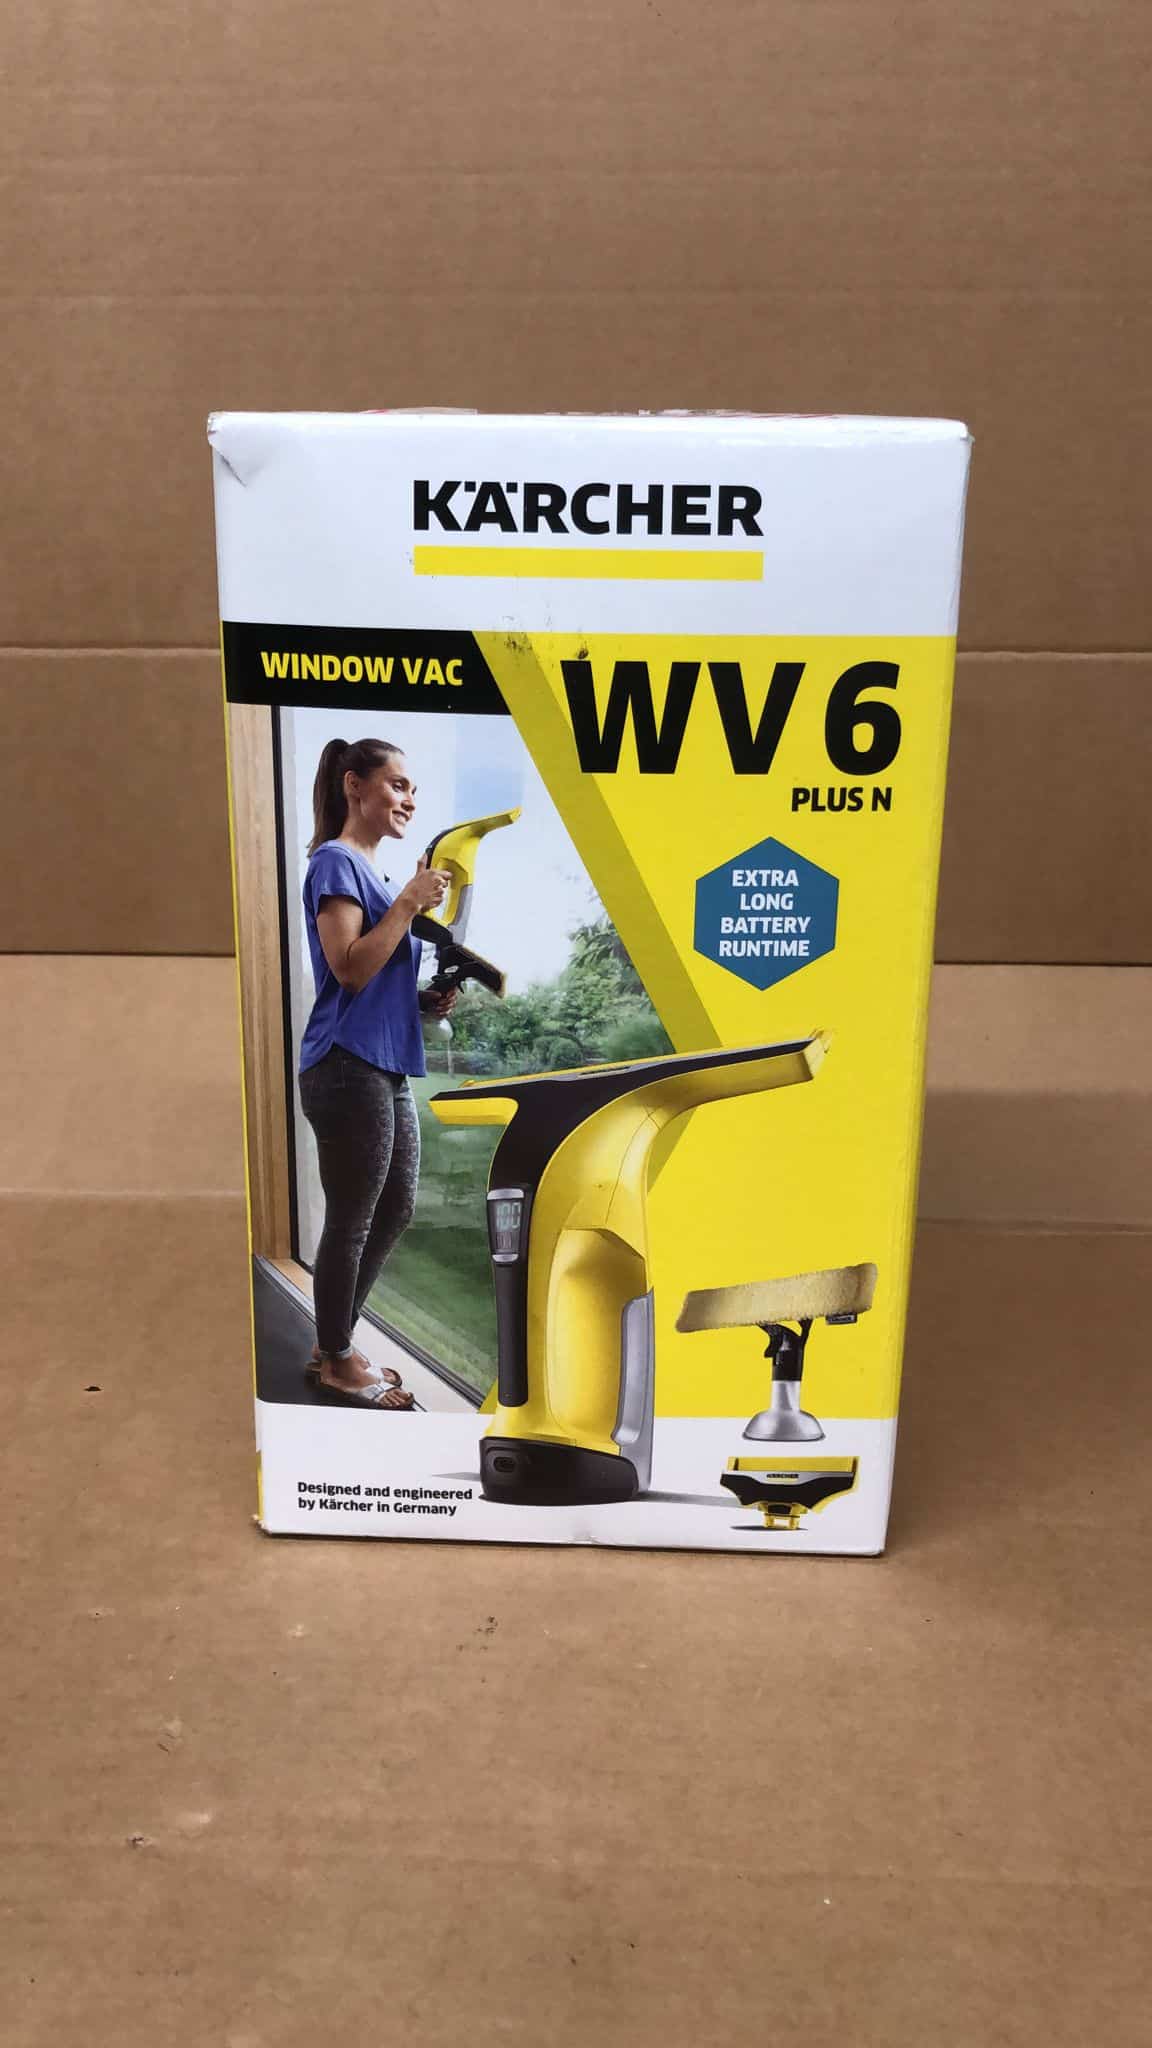 Kärcher 16332220 WV 6 Plus N Window Vac, 10 W, 240 V, Yellow/Black